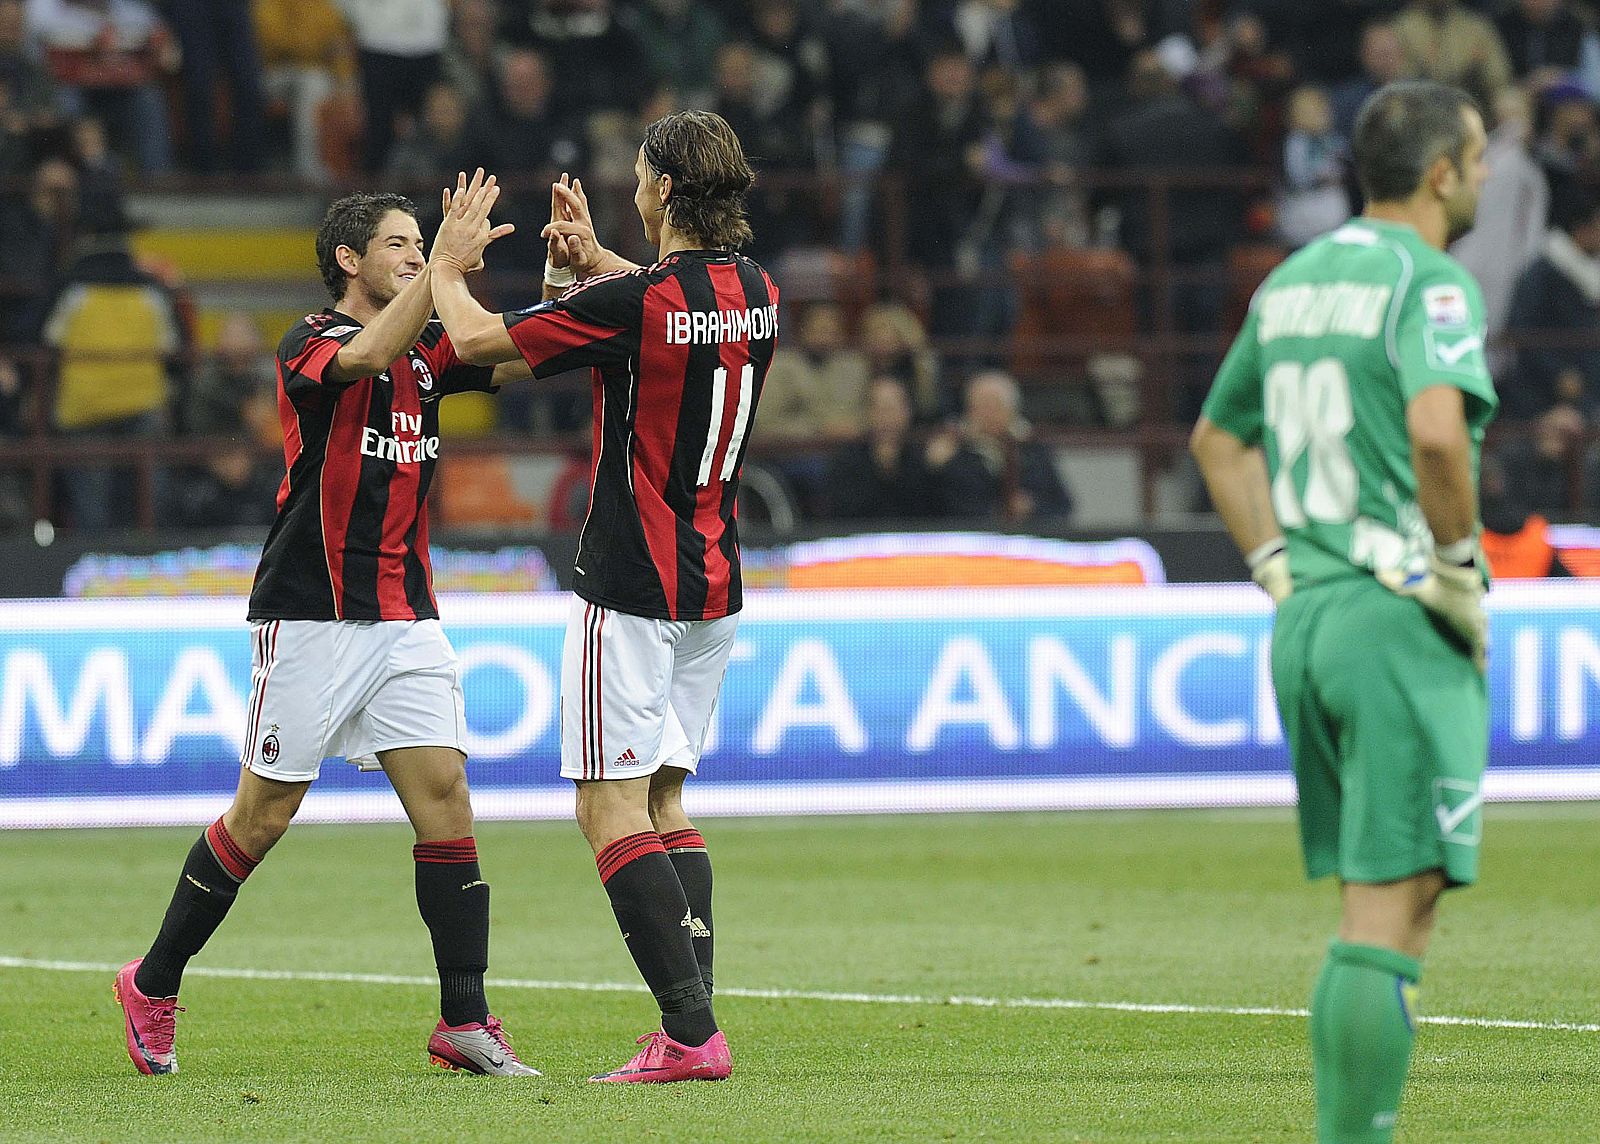 Pato e Ibrahimovic celebran un gol con el Milan